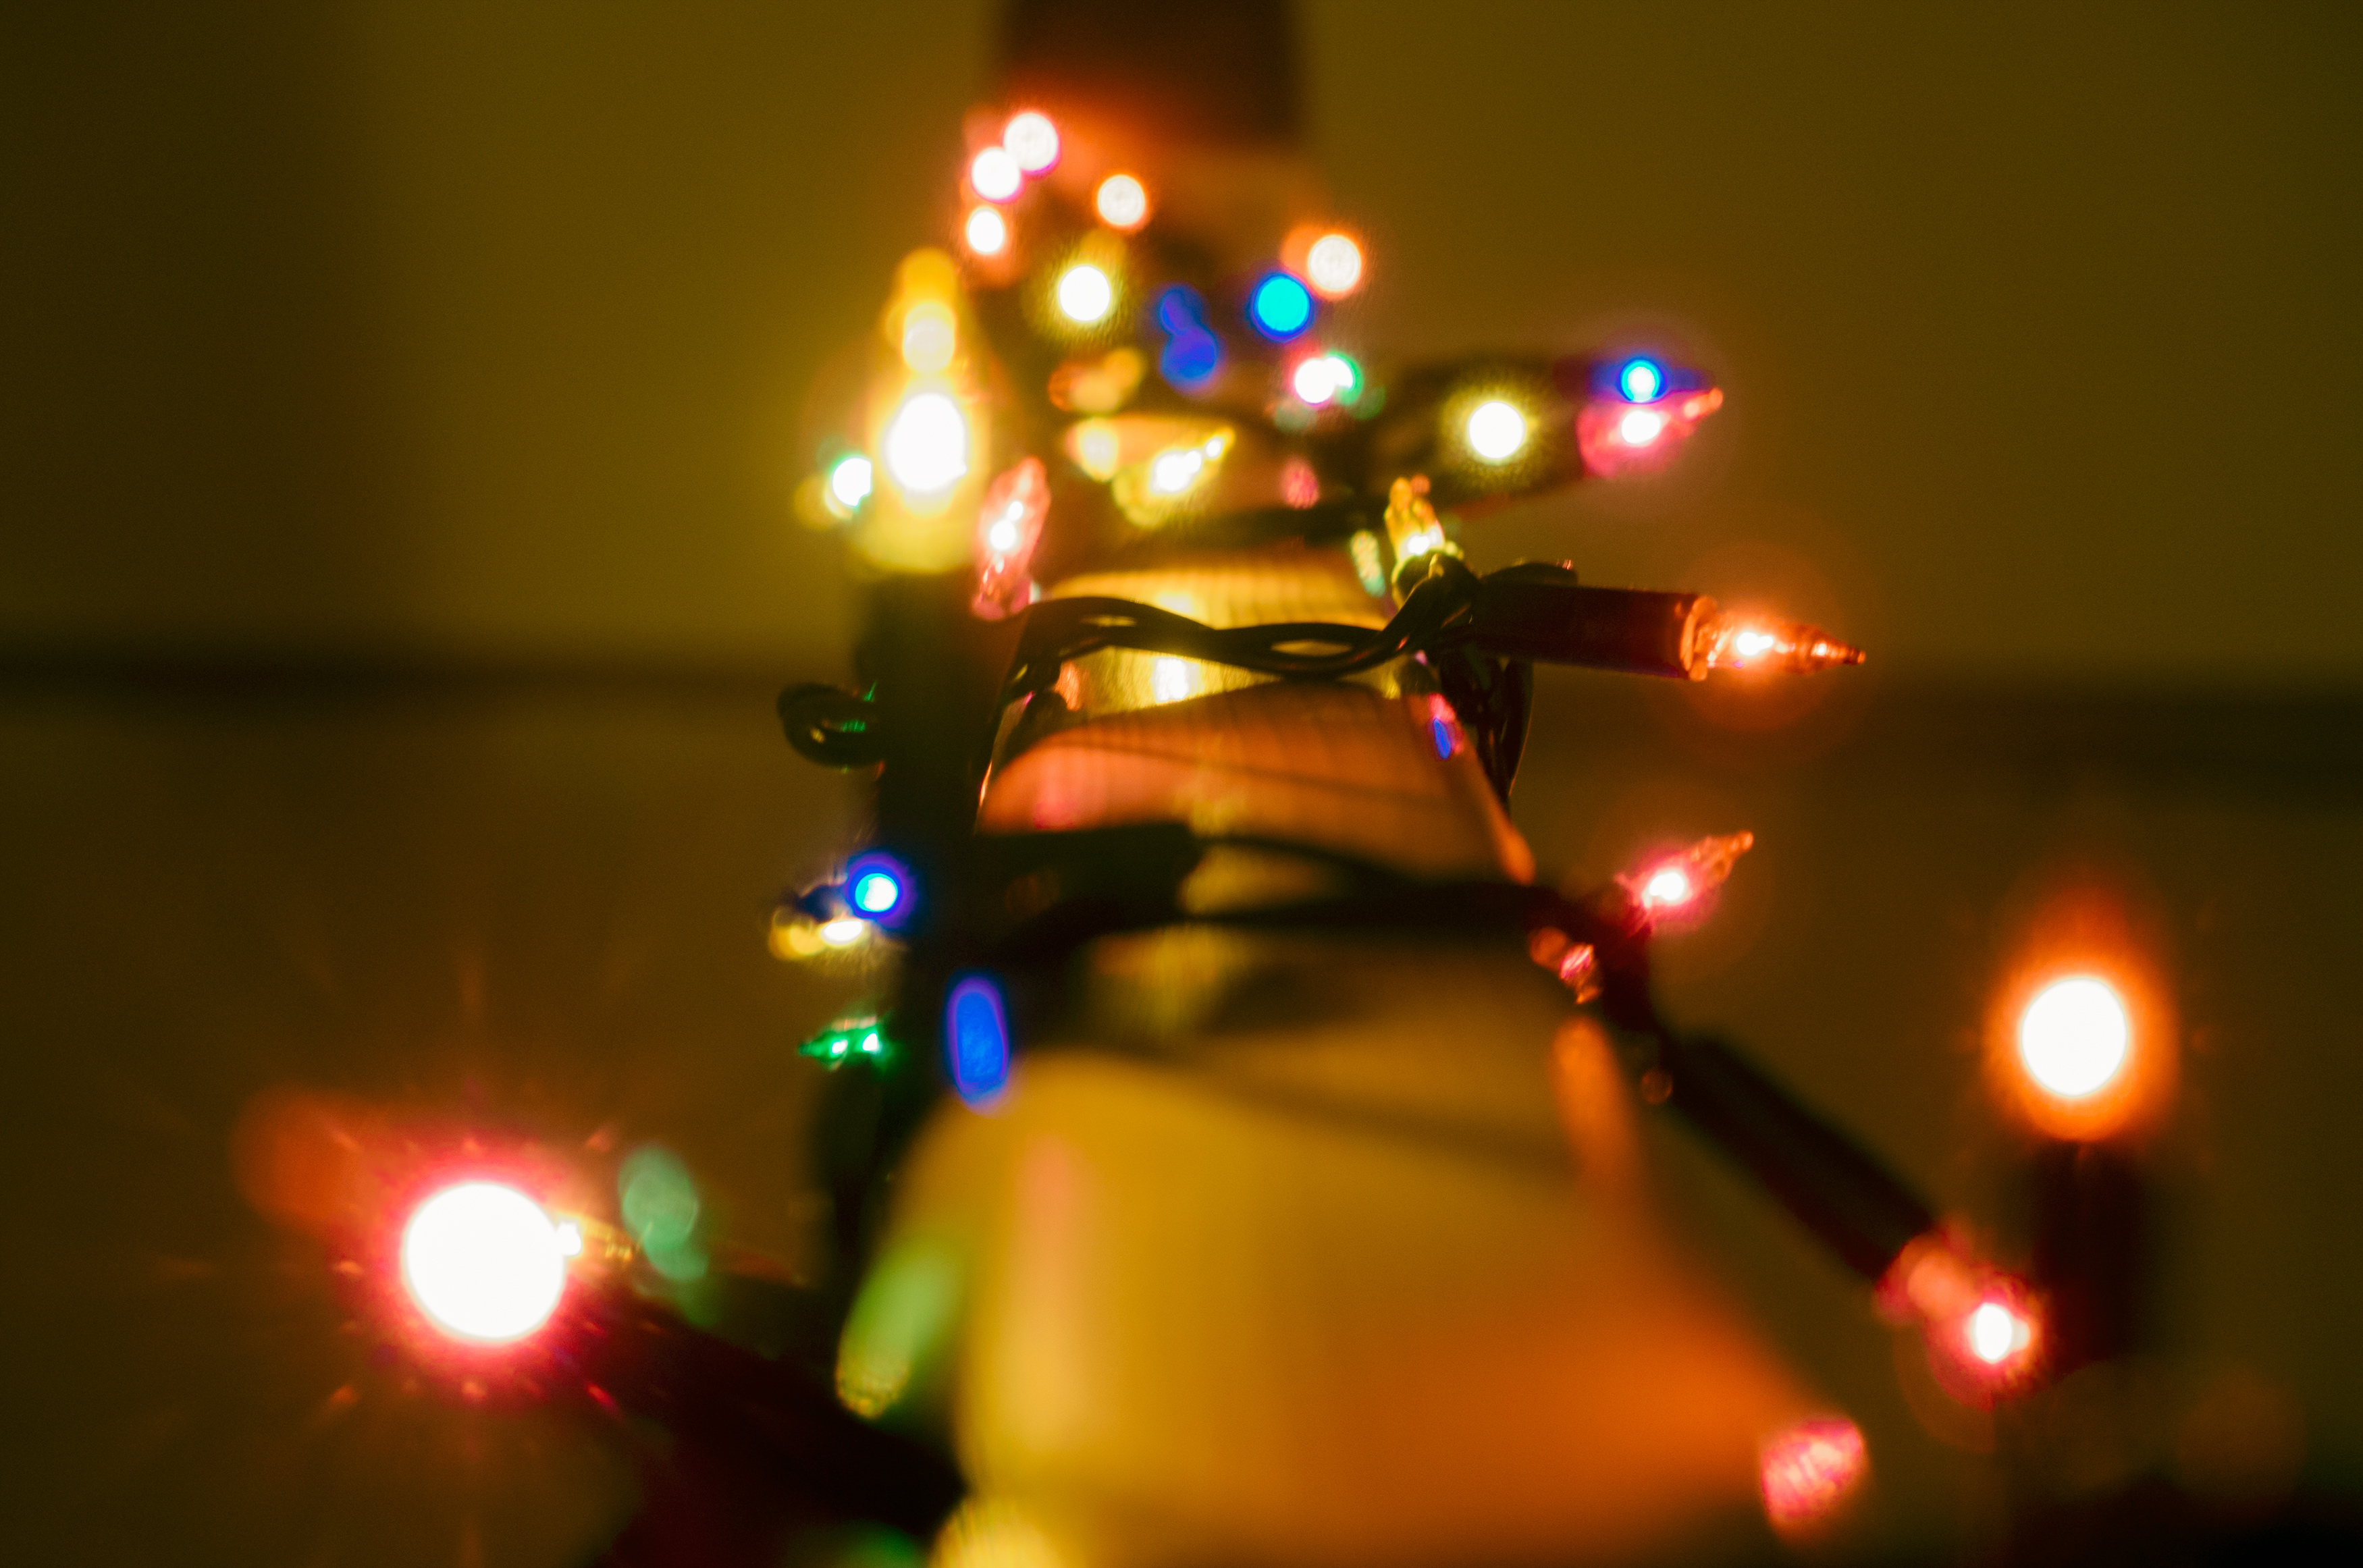  Christmas  Lights  Decoration  FREE image on LibreShot